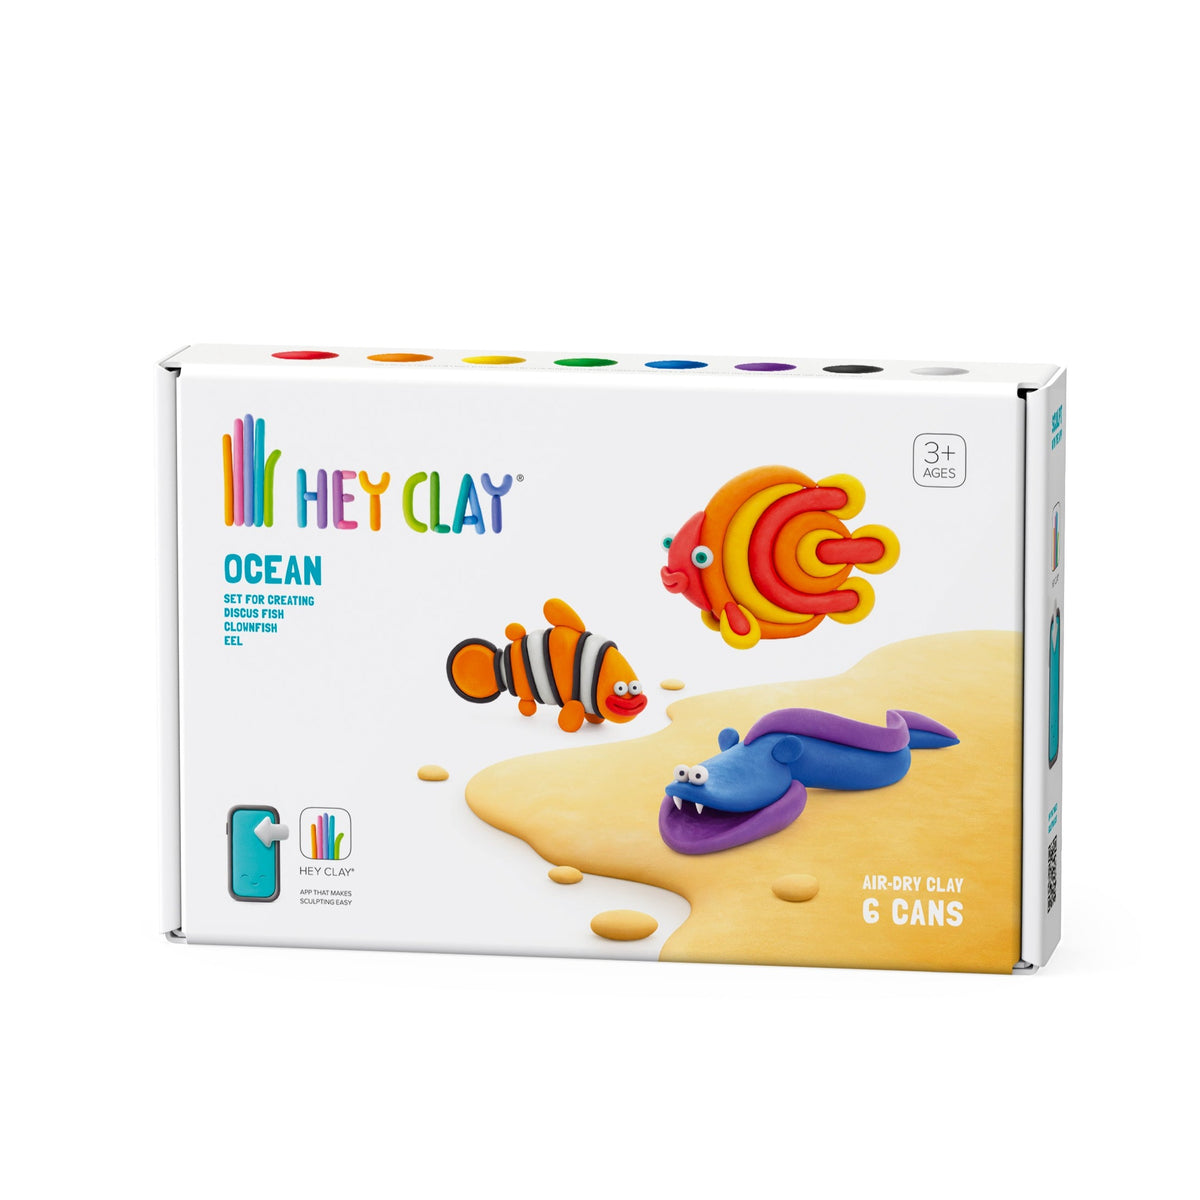 Hey Clay - Ocean (9 options)